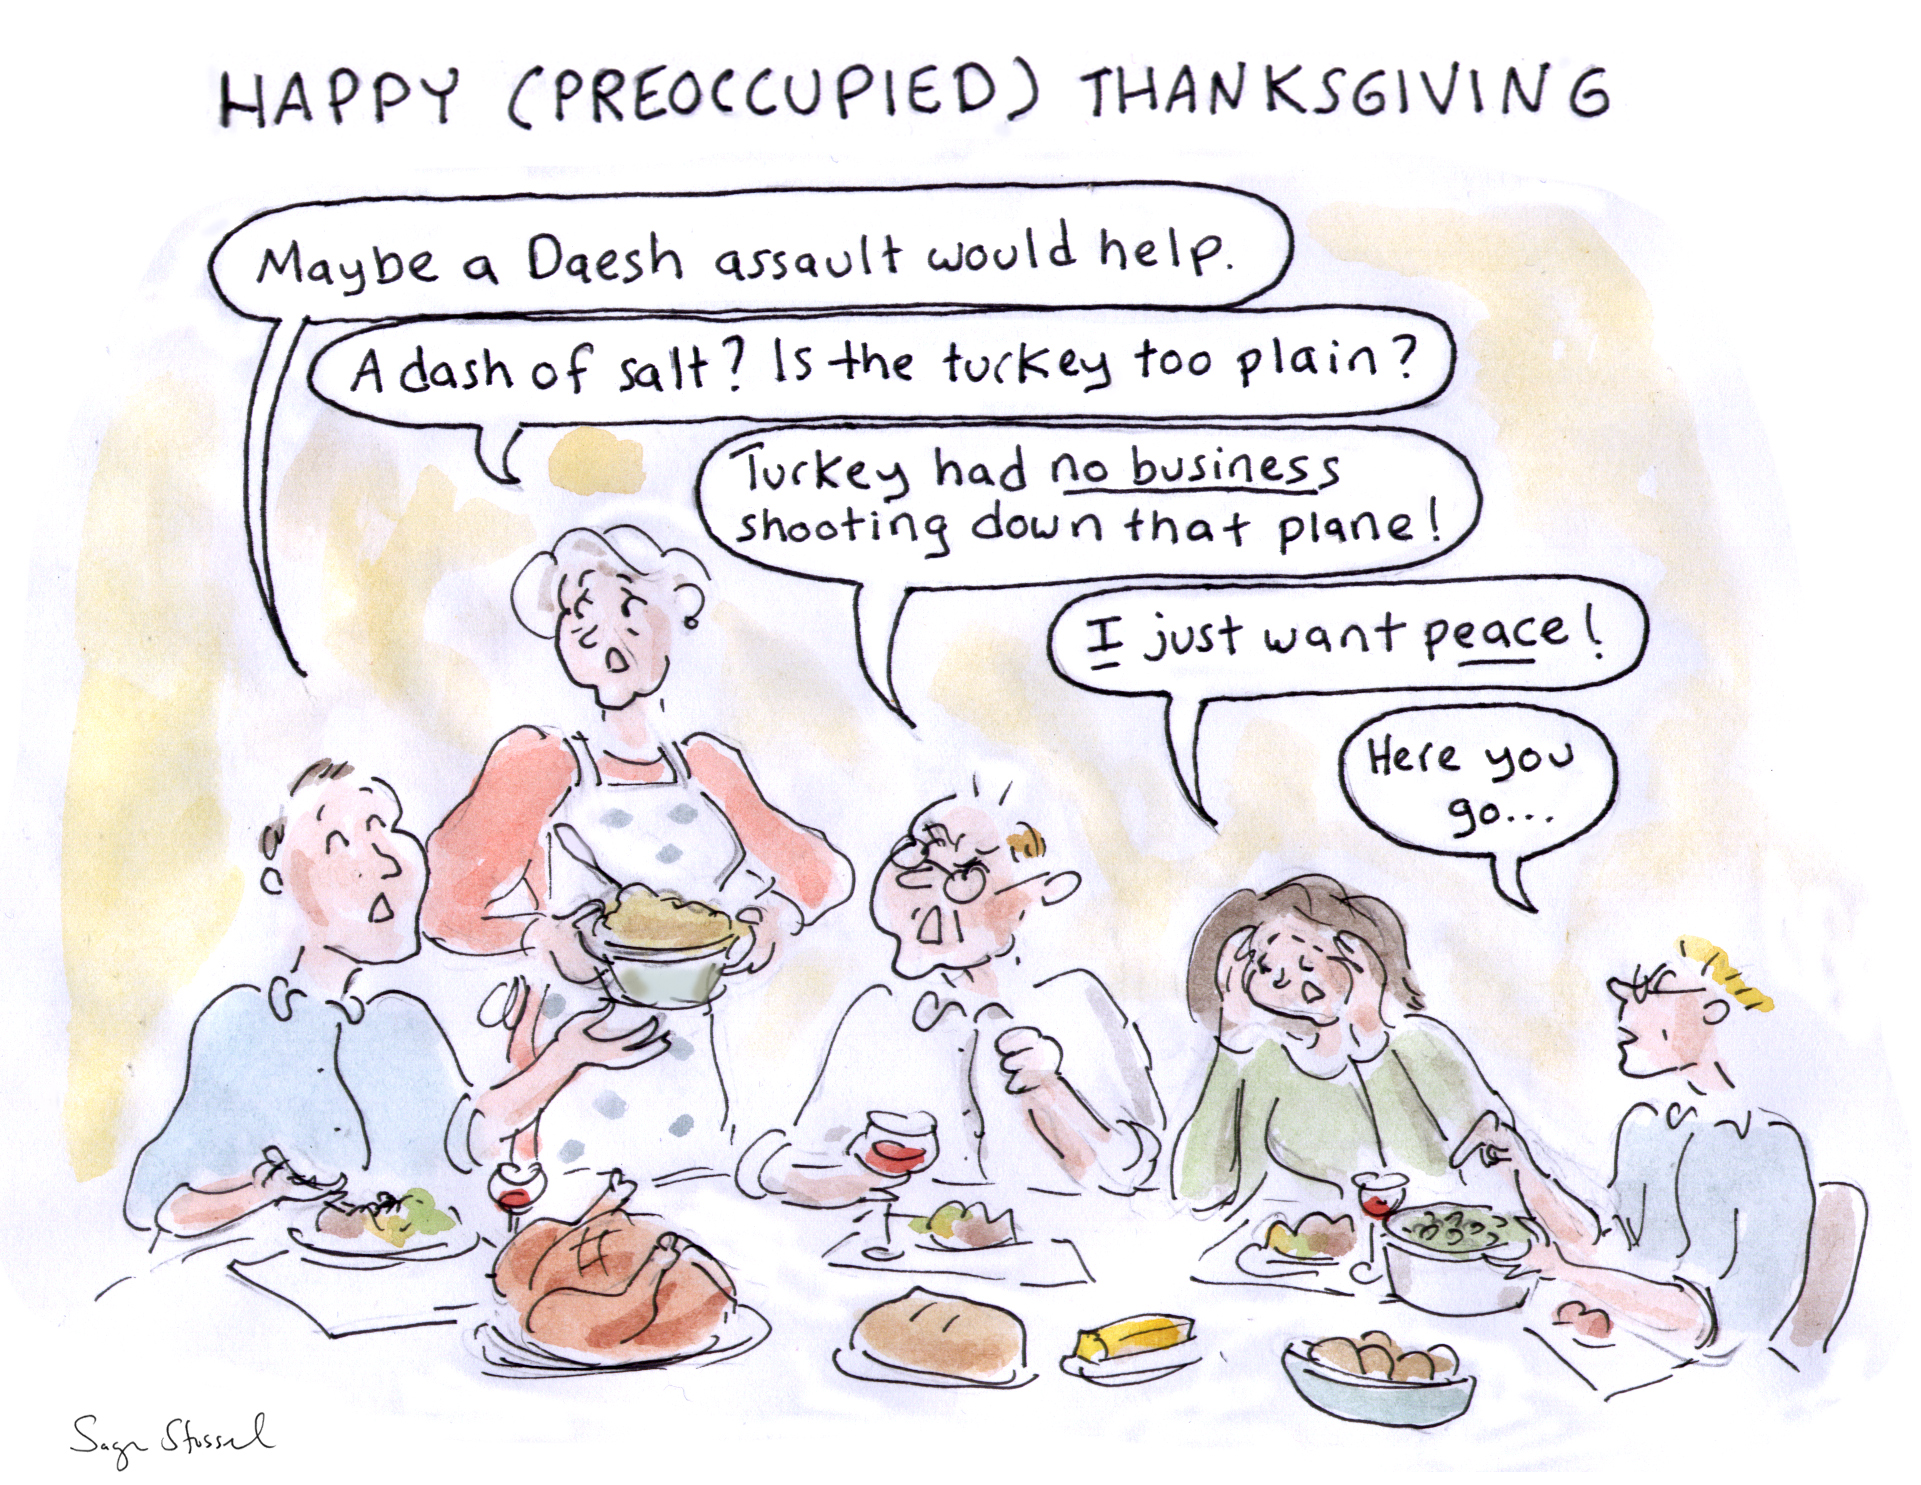 thanksgiving 2015, turkey, peas, salt, isis, daesh, turkey shoot down plane, putin, erdogan, paris, terrorism, cartoon